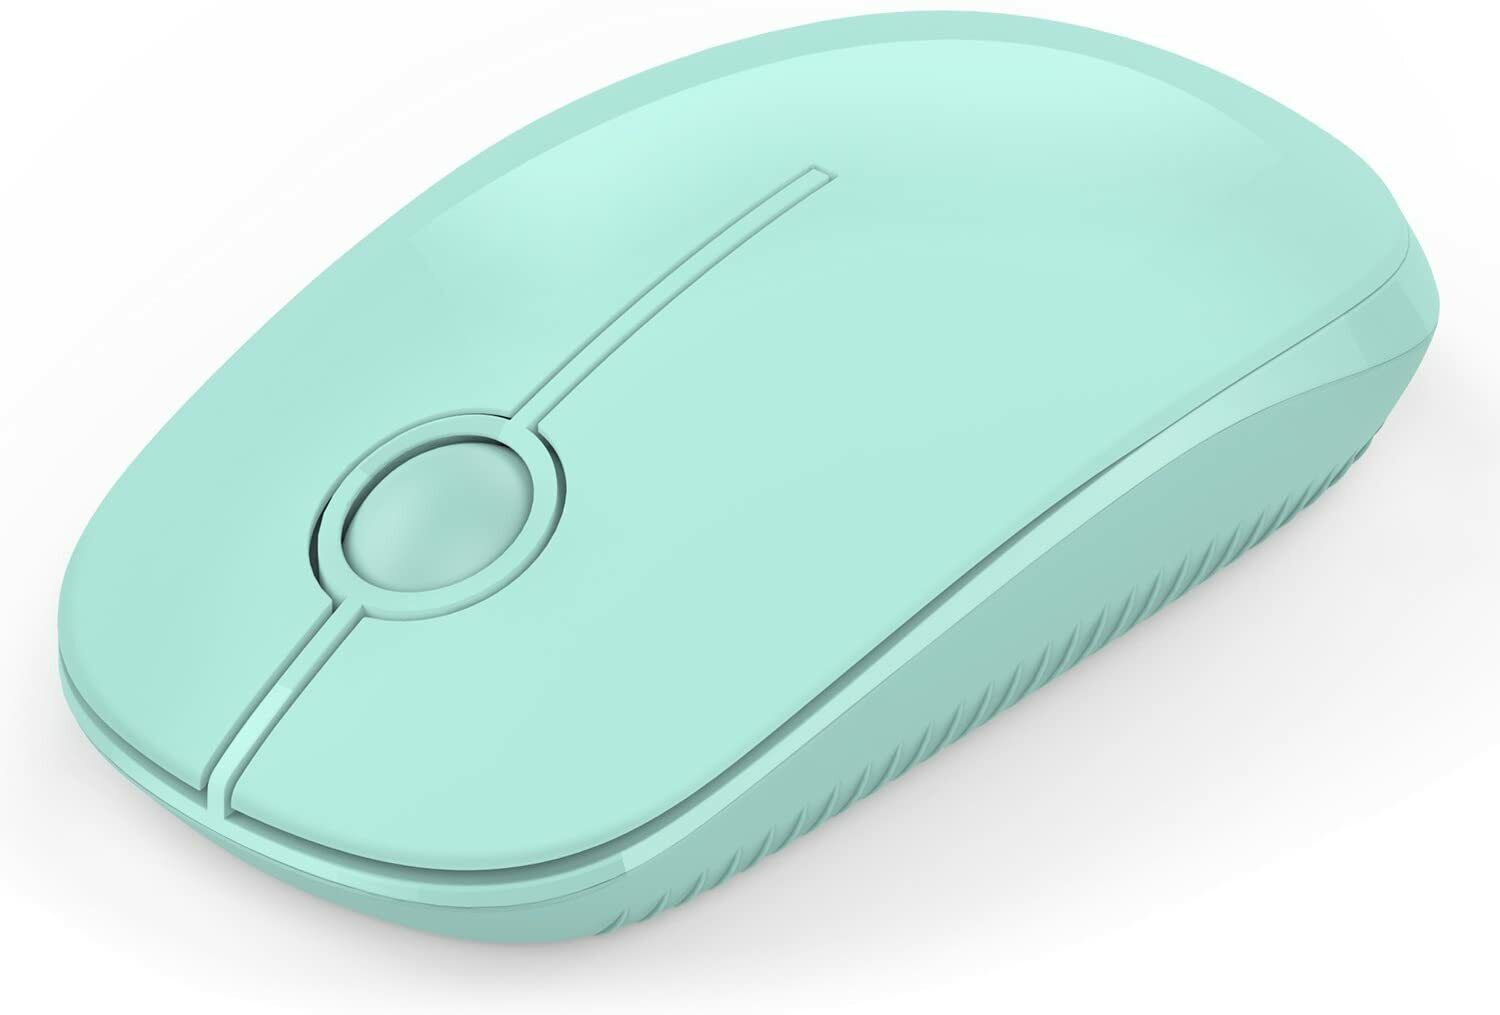 Jelly Comb 2.4G Slim Wireless Mouse - Sleek, Smooth, & Ergonomically Designed